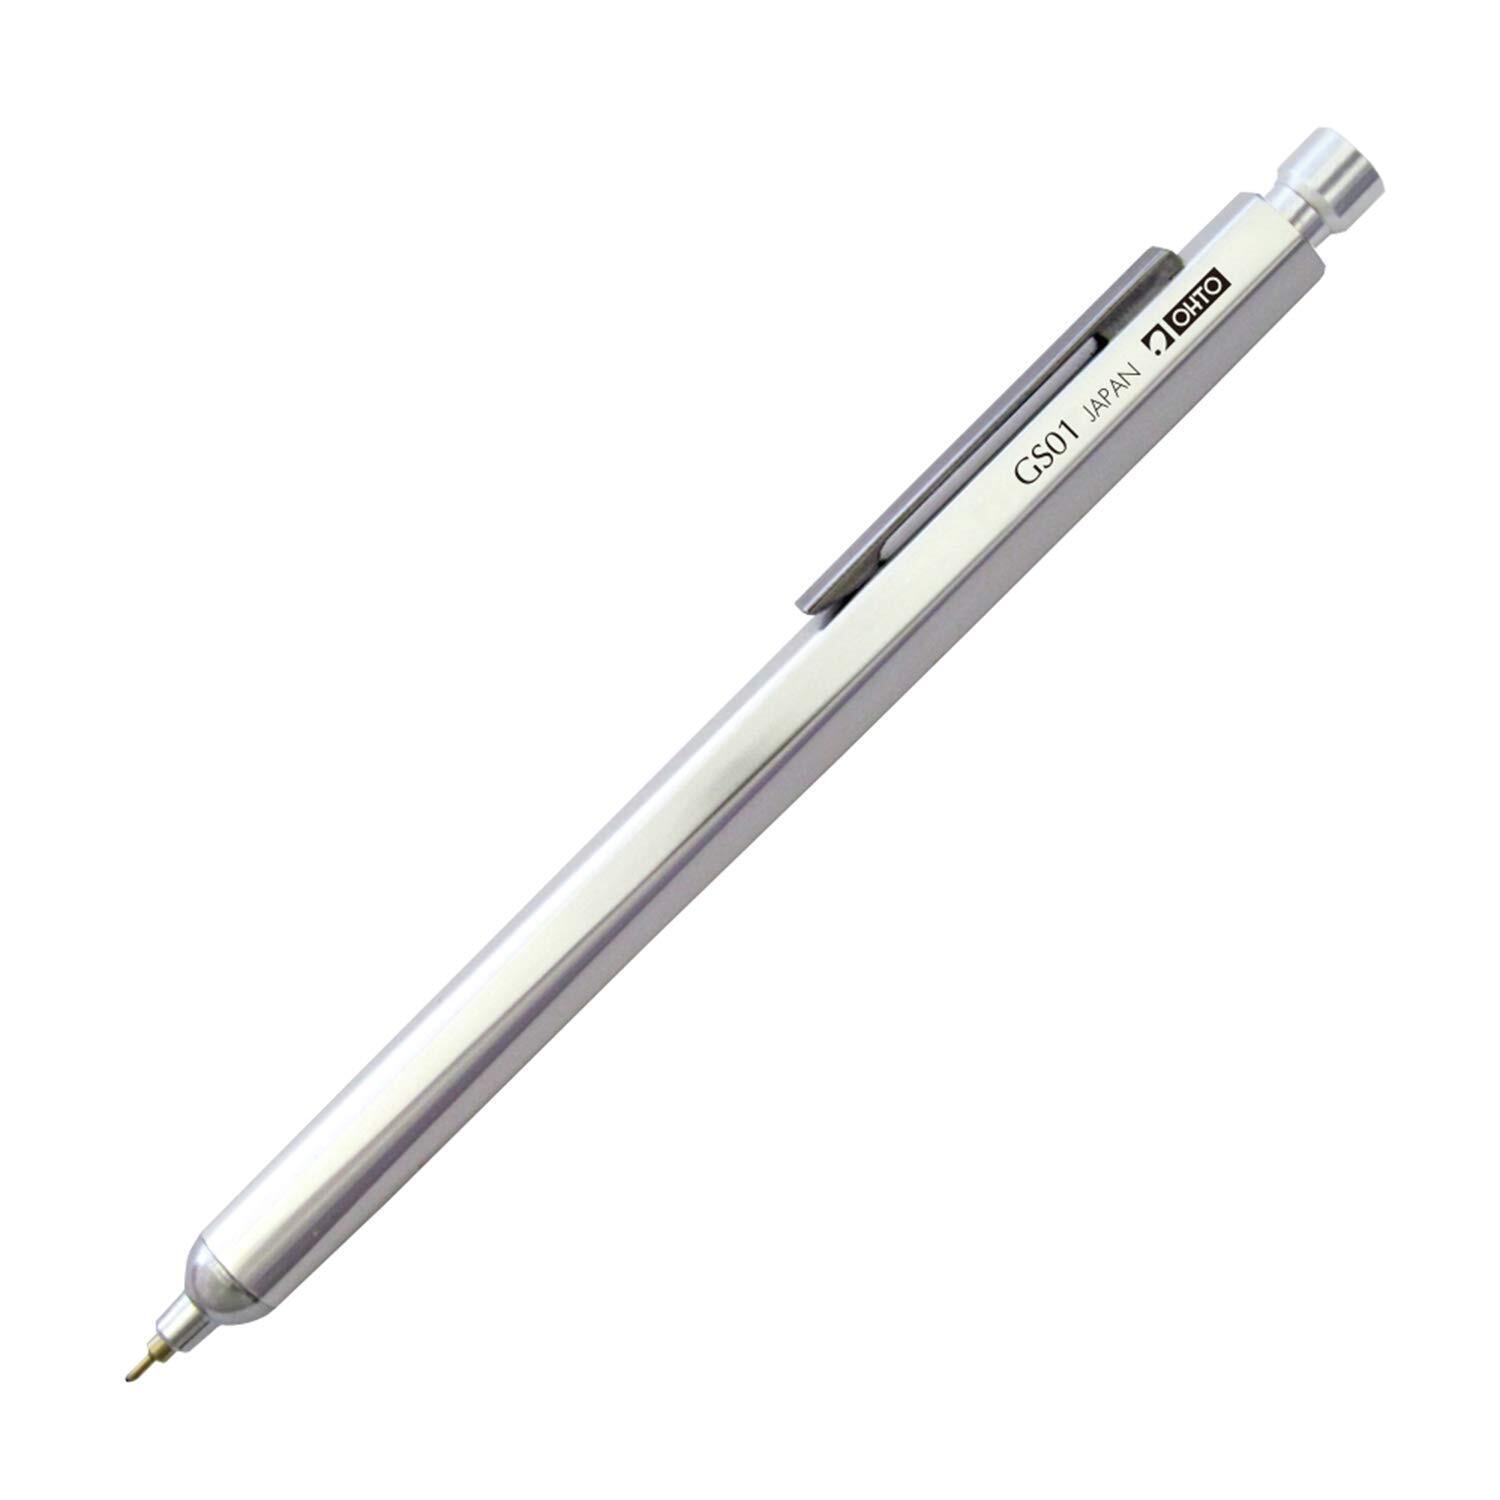 Auto GS01-S7-SV Oil-based Ballpoint Pen, GS01, Silver